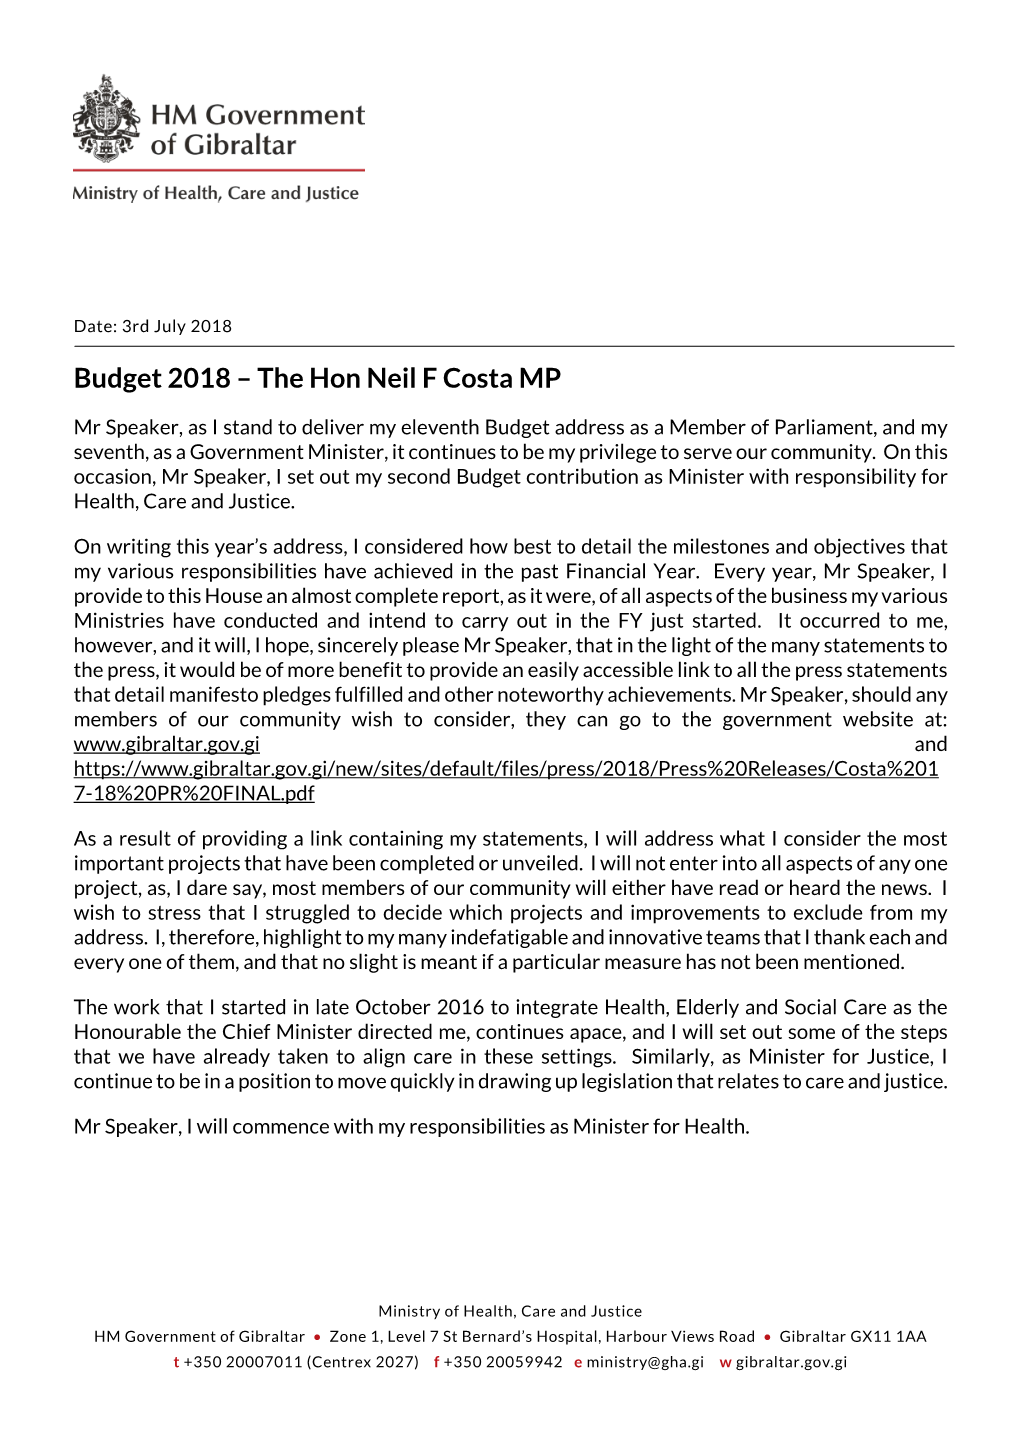 Budget 2018 – the Hon Neil F Costa MP